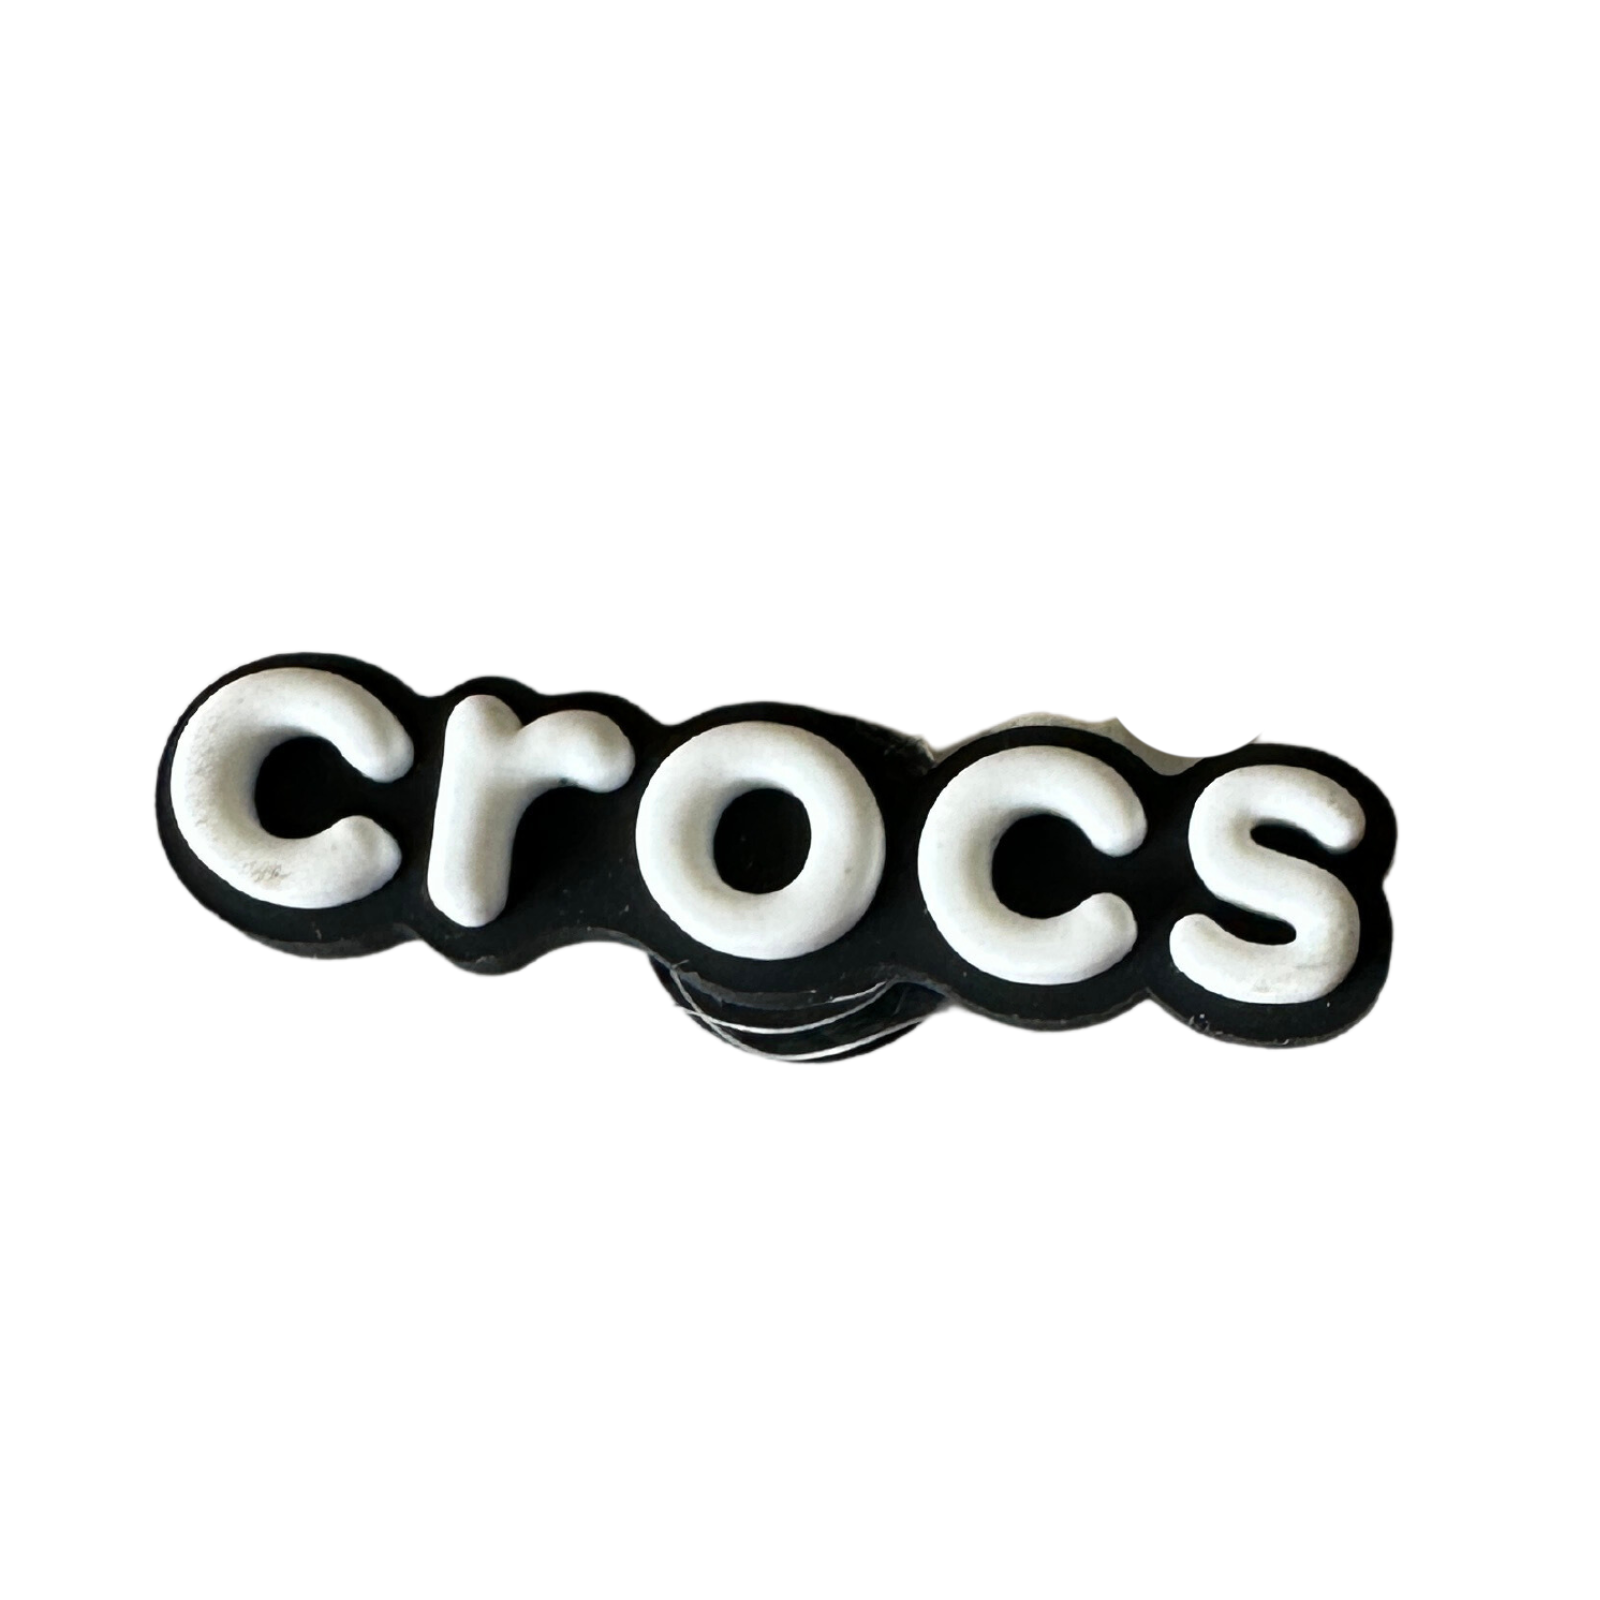 Buy Wholesale China Customizable Designer Croc Charms Logo Jibbitz